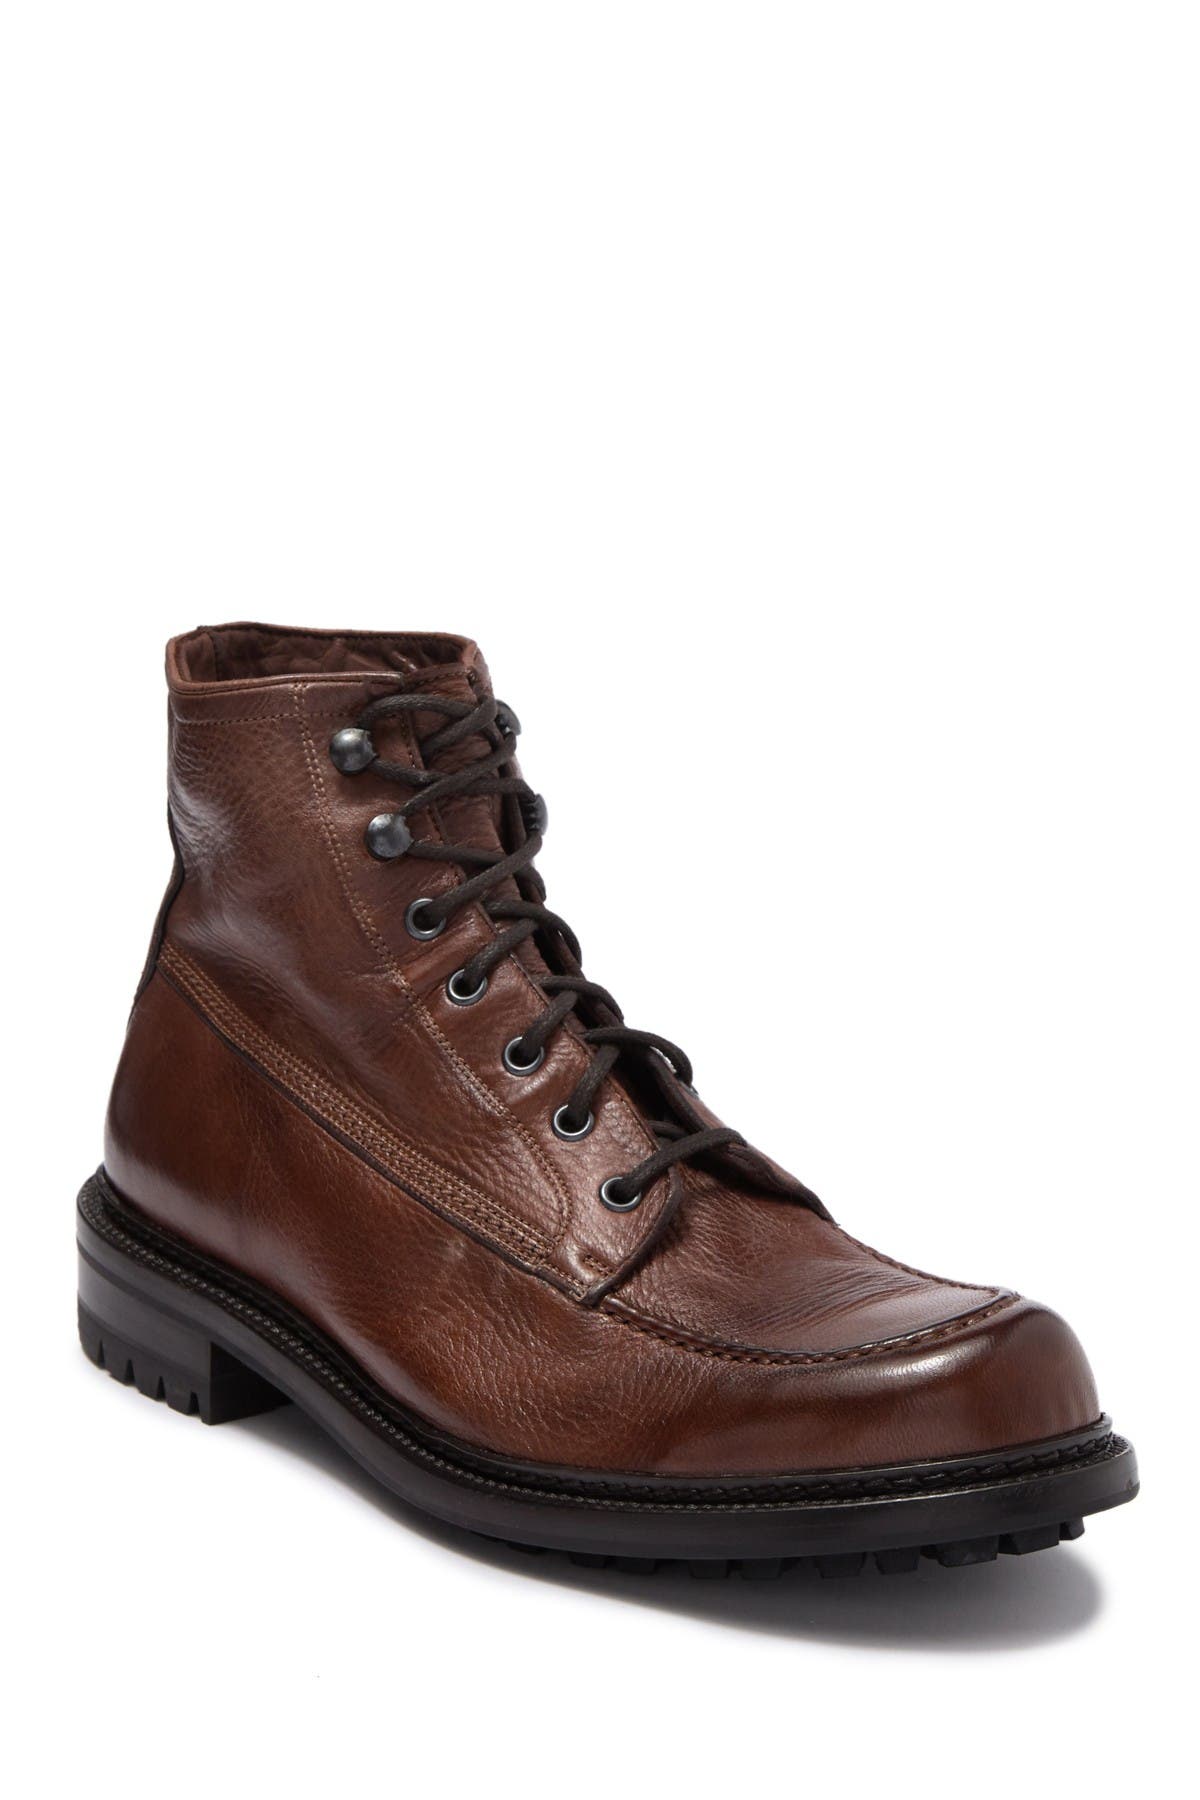 Frye | Torino Leather Work Boot 